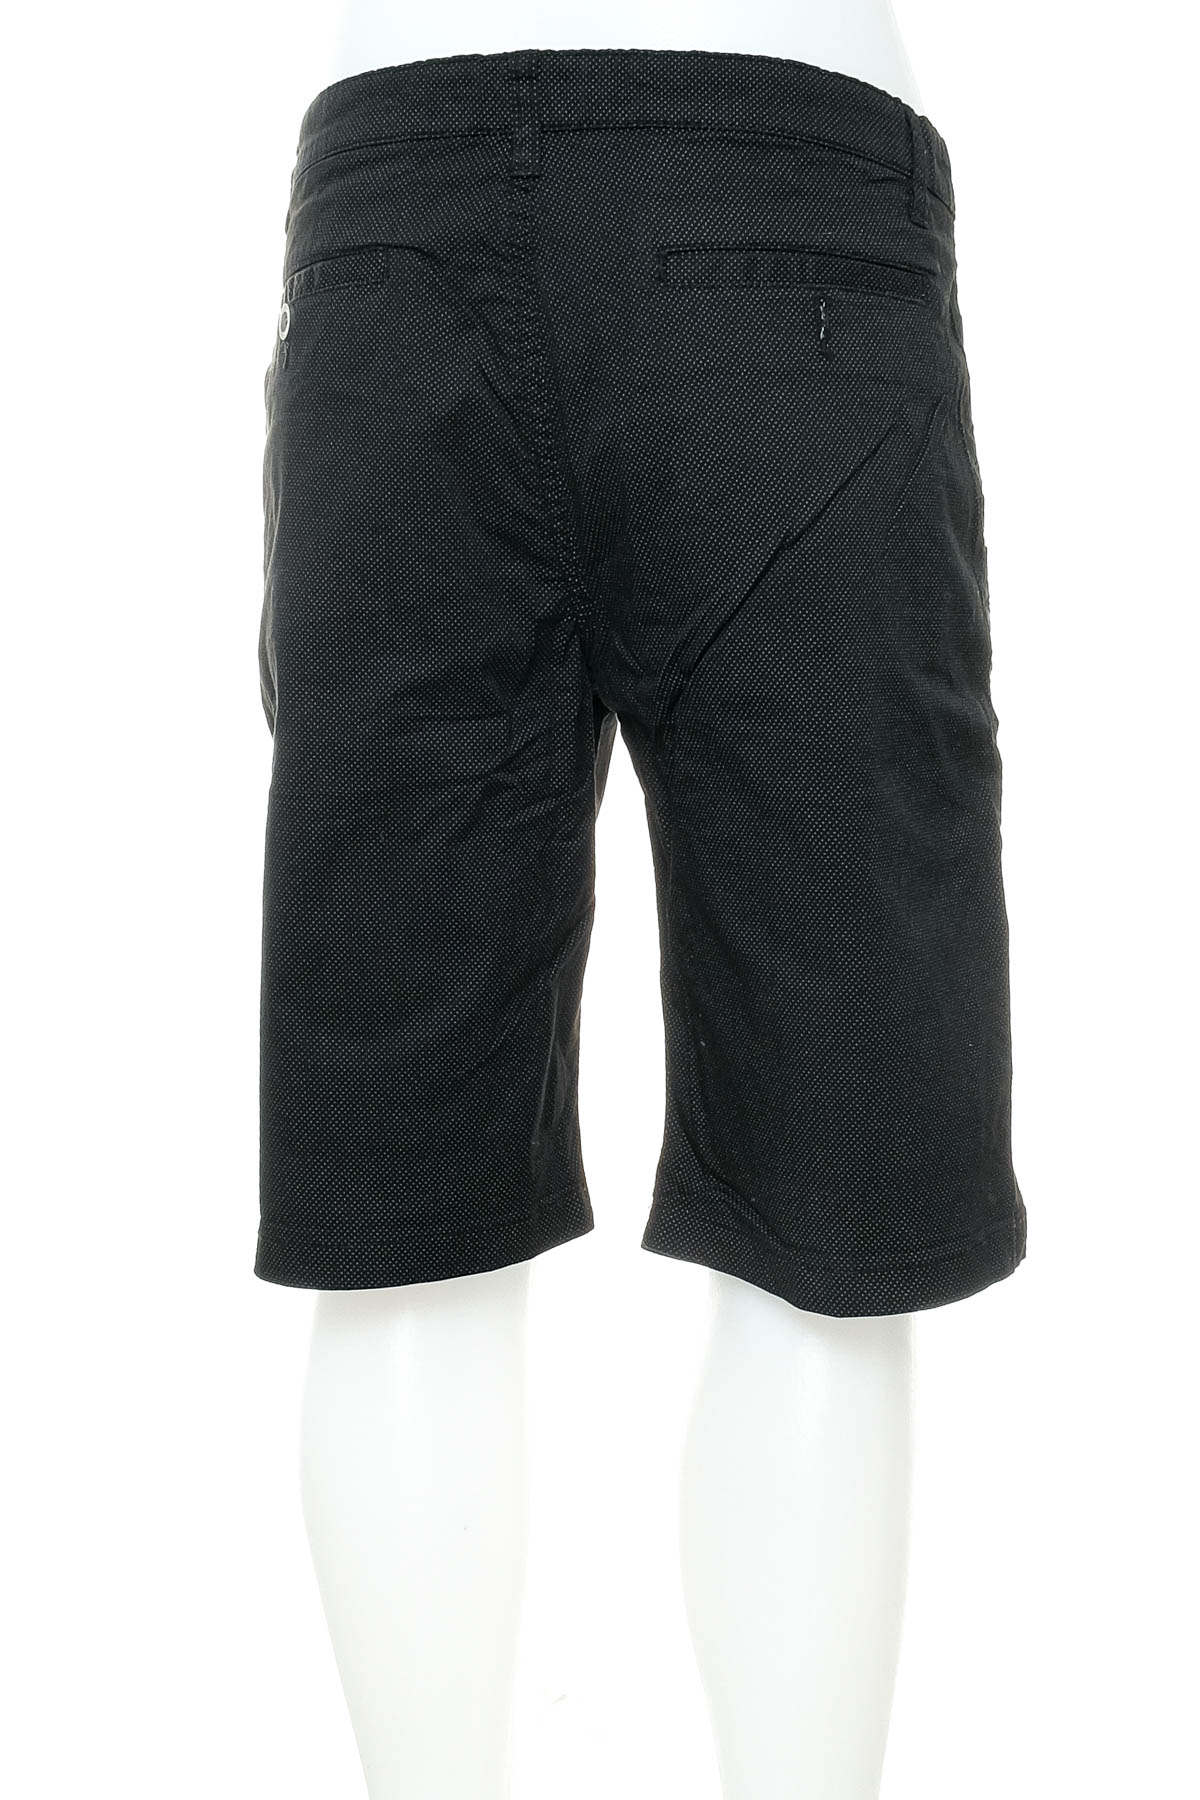 Men's shorts - Berna - 1